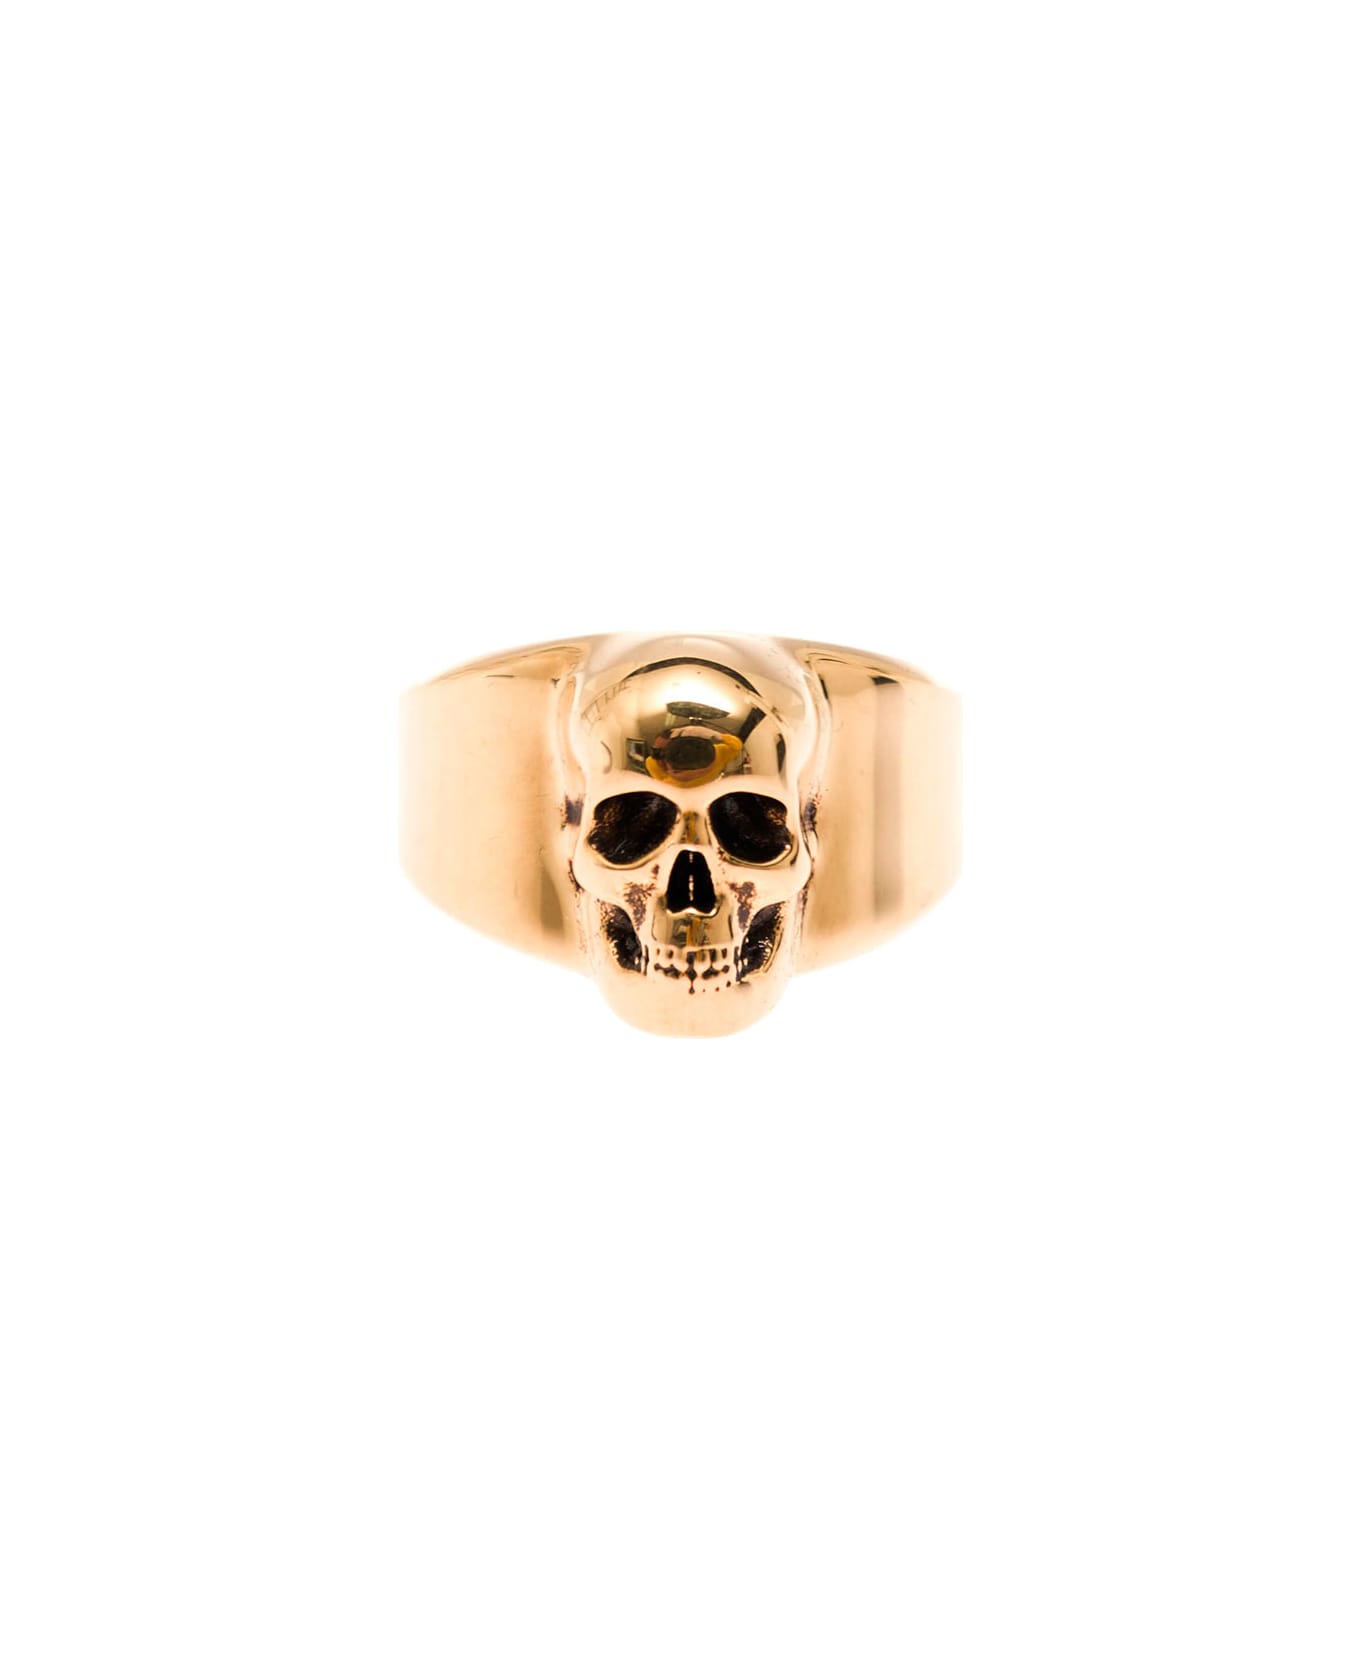 Alexander McQueen Man's Skull Gold Colored Brass Ring - Metallic